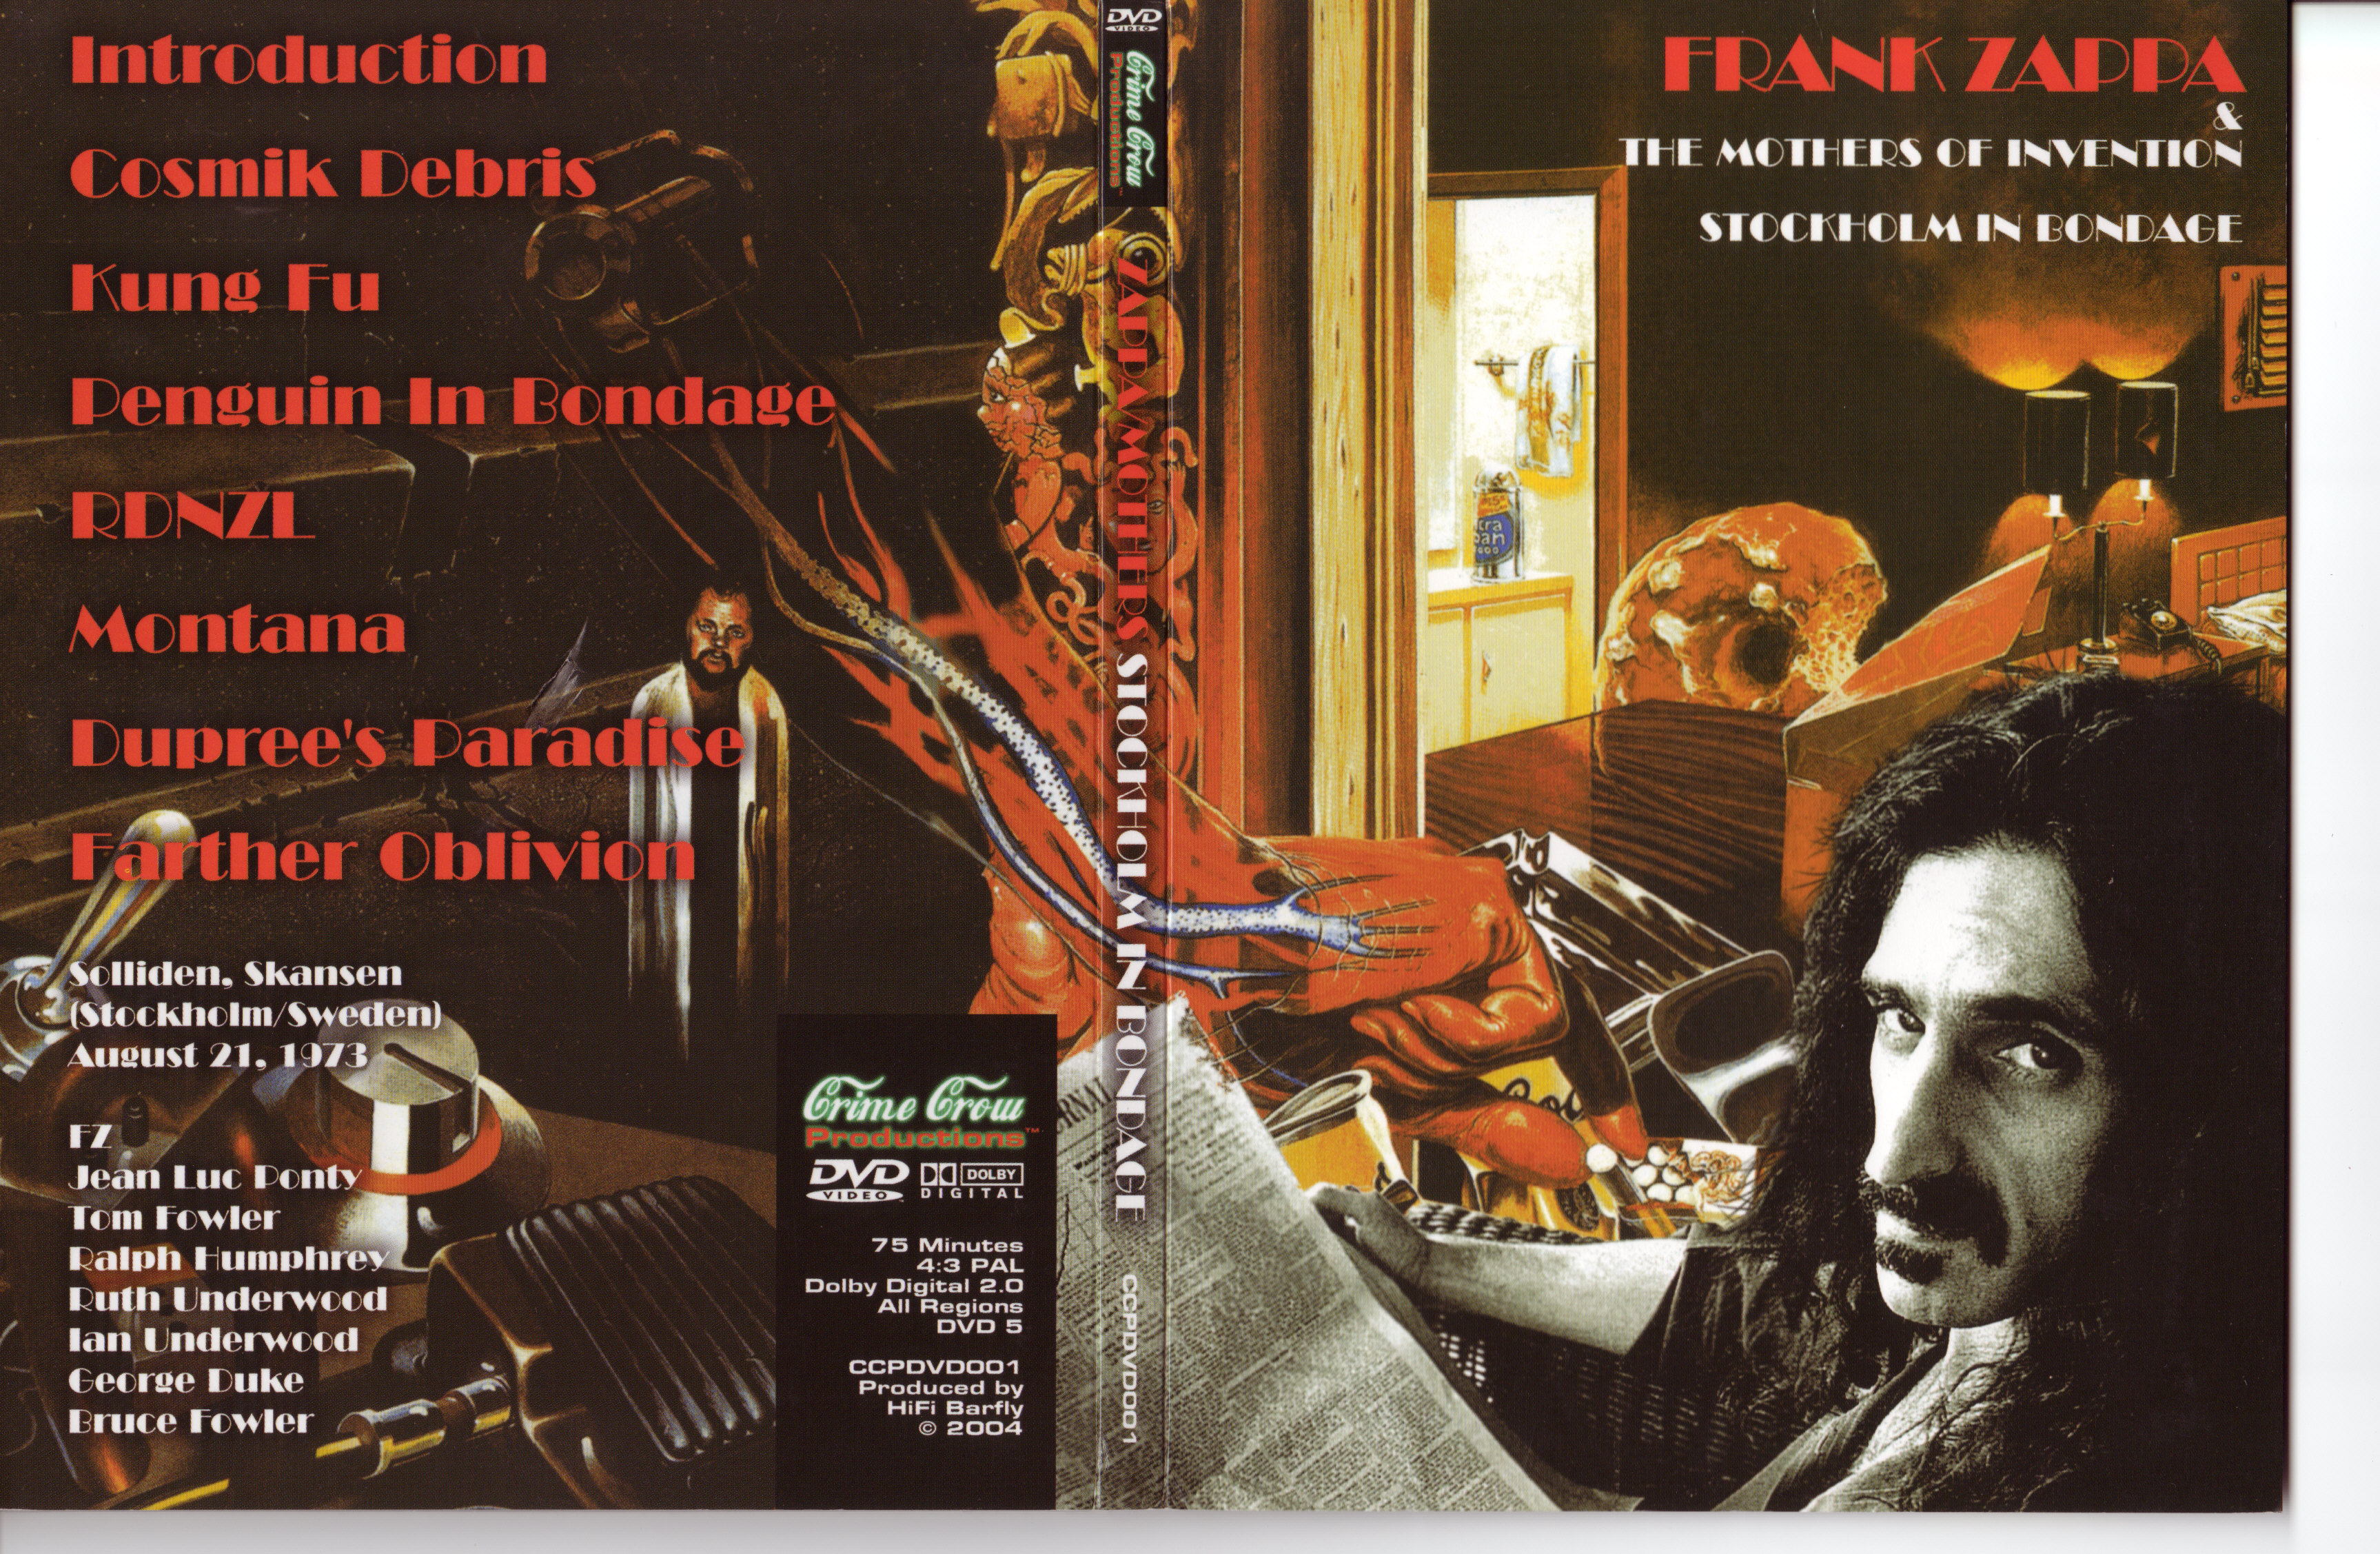 Jaquette DVD Frank Zappa Stockholm in bondage